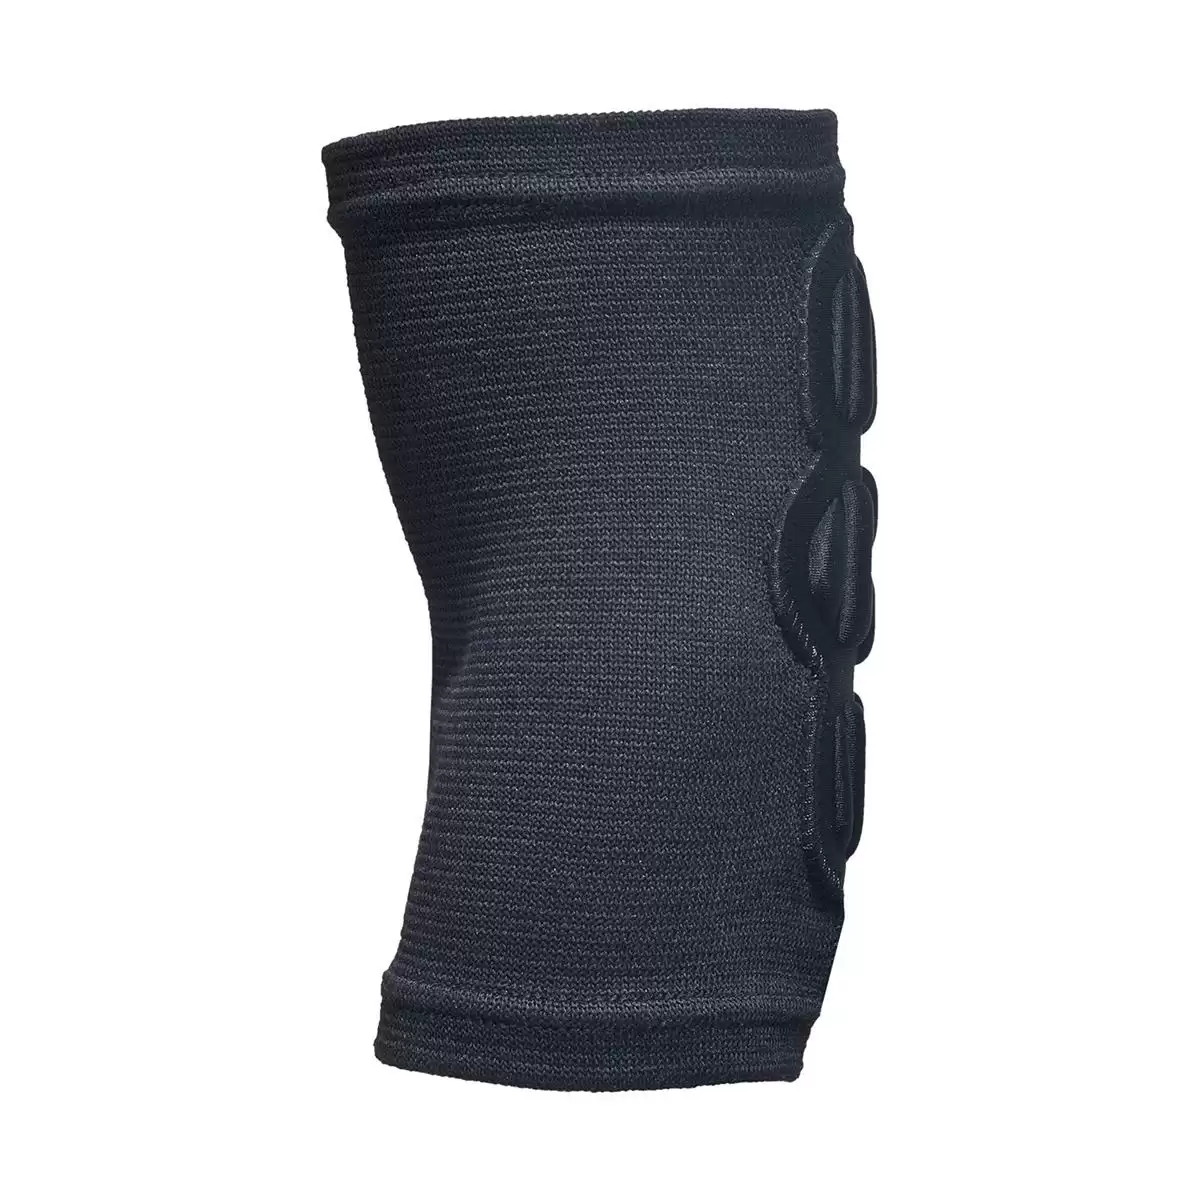 Sleeve 3D elbow guards Black Size XL #1